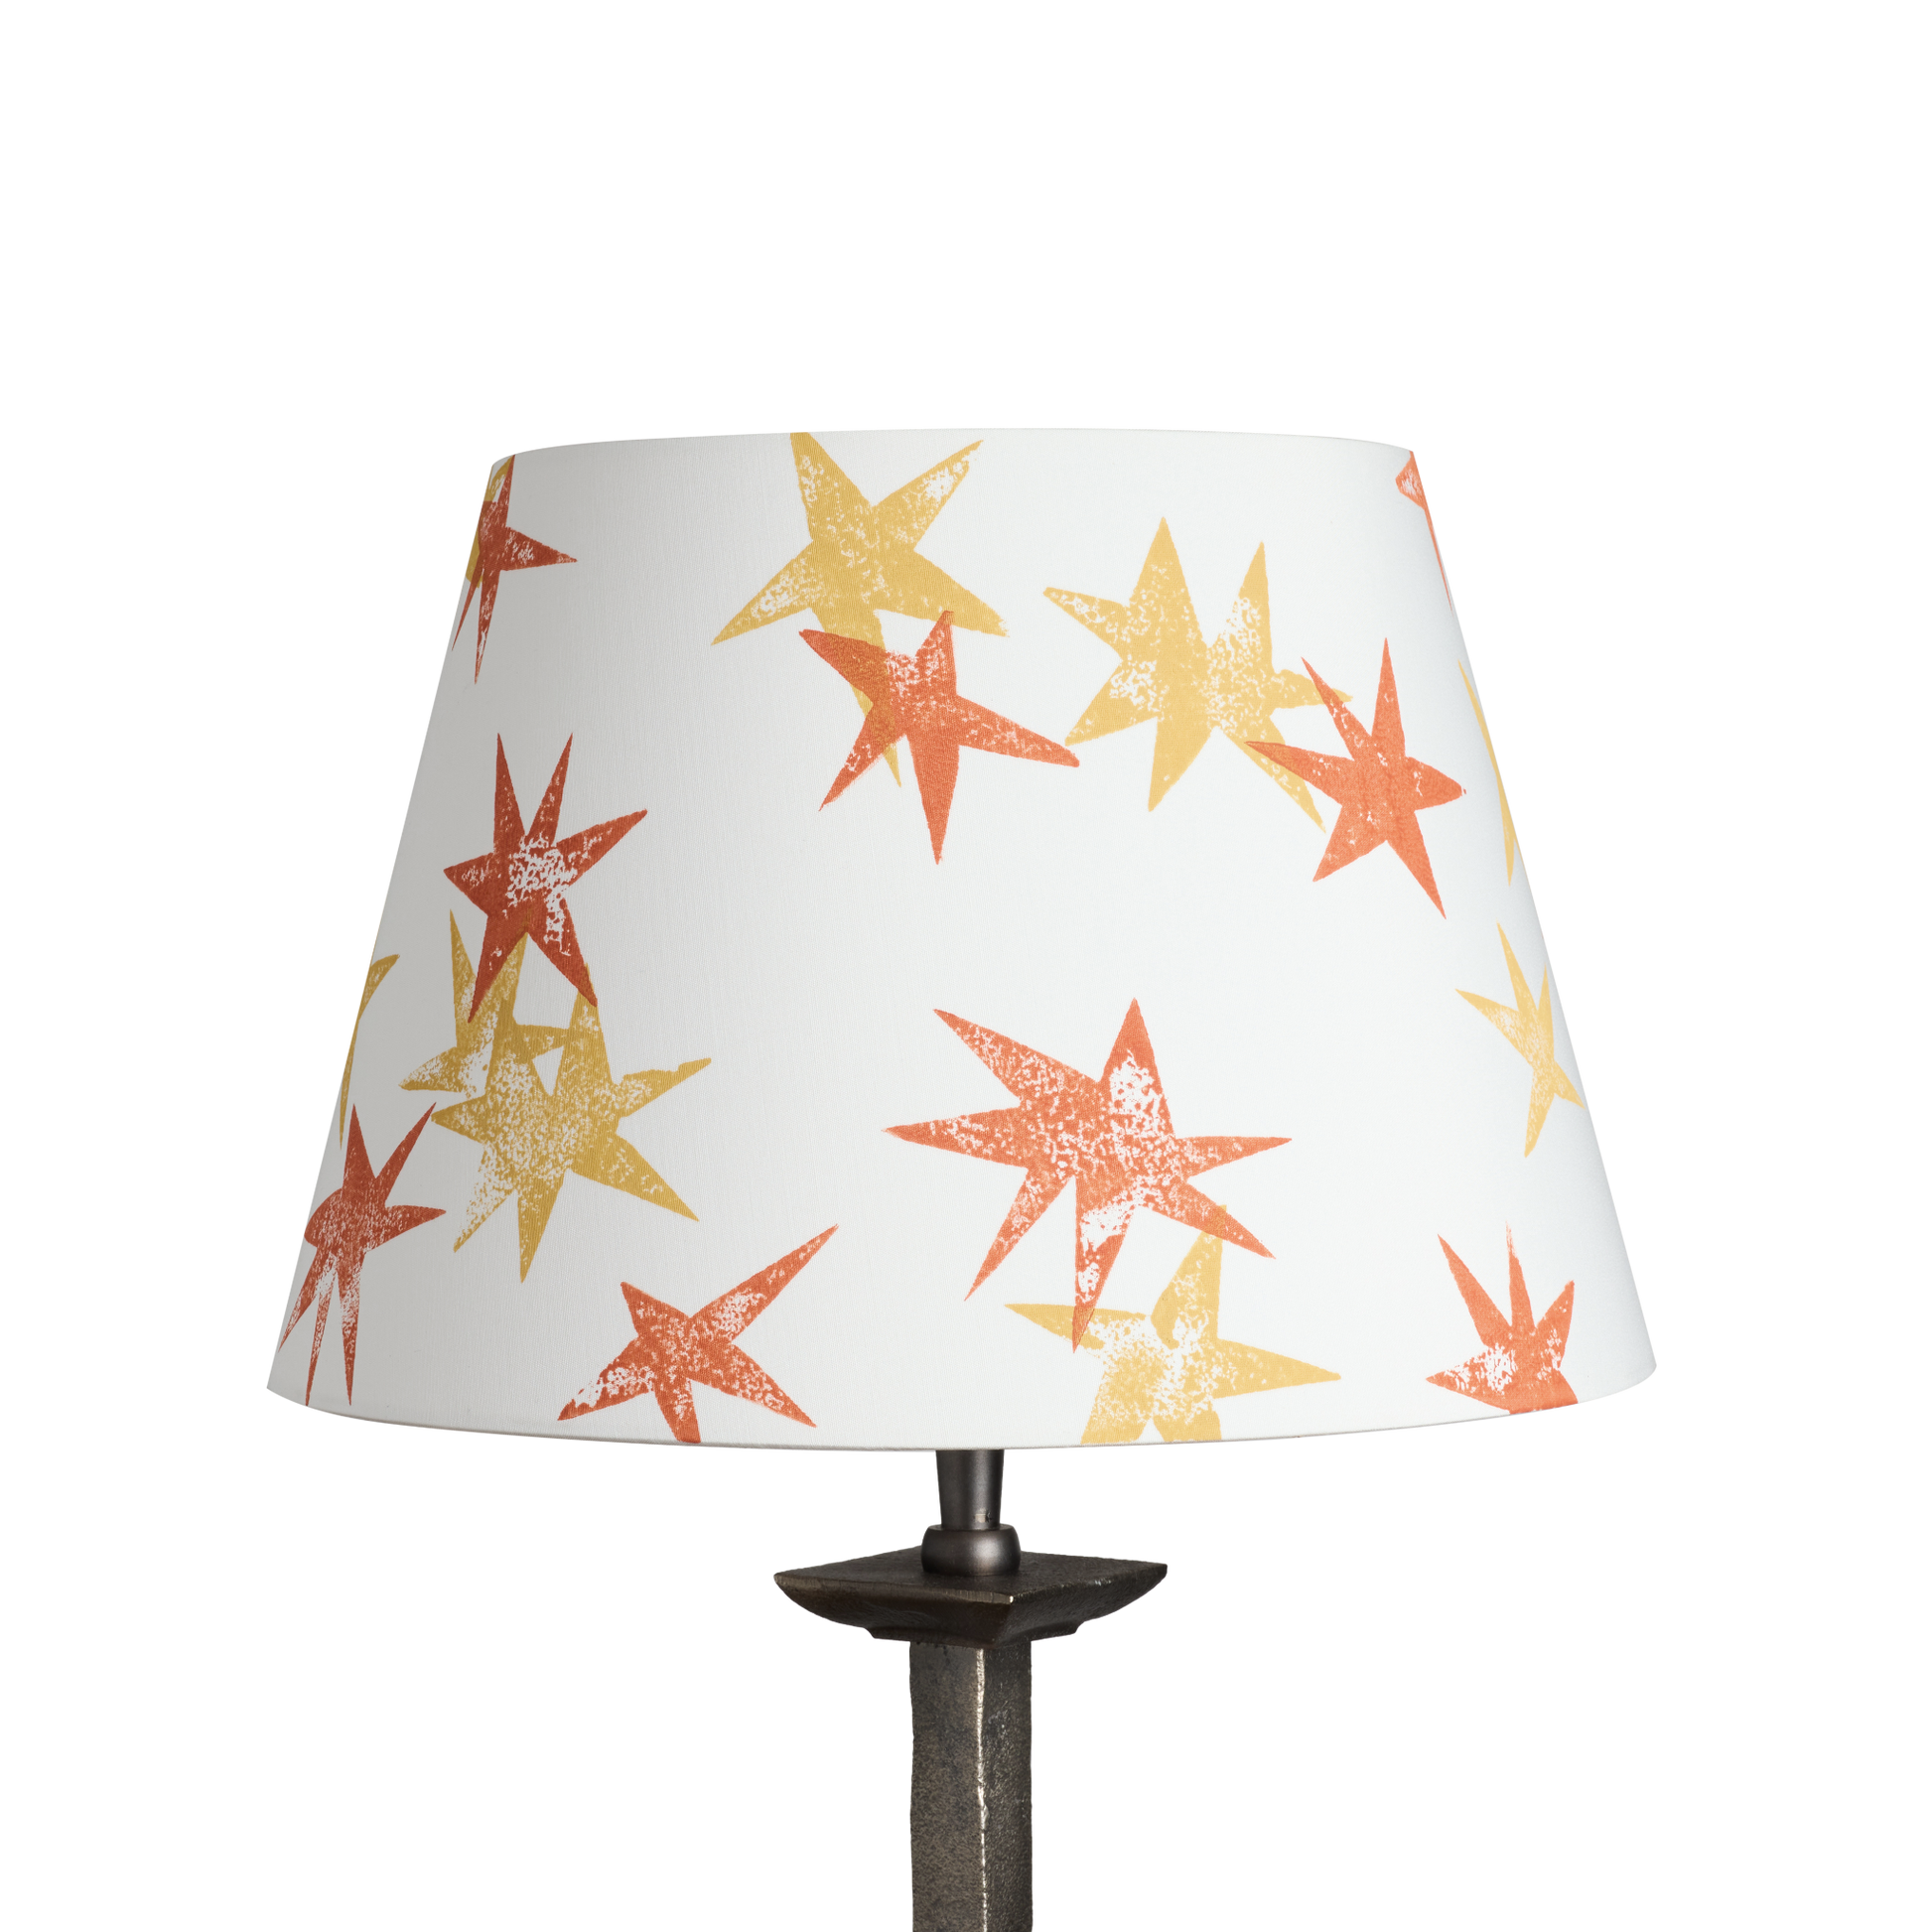 Hand printed lampshade with orange and yellow stars